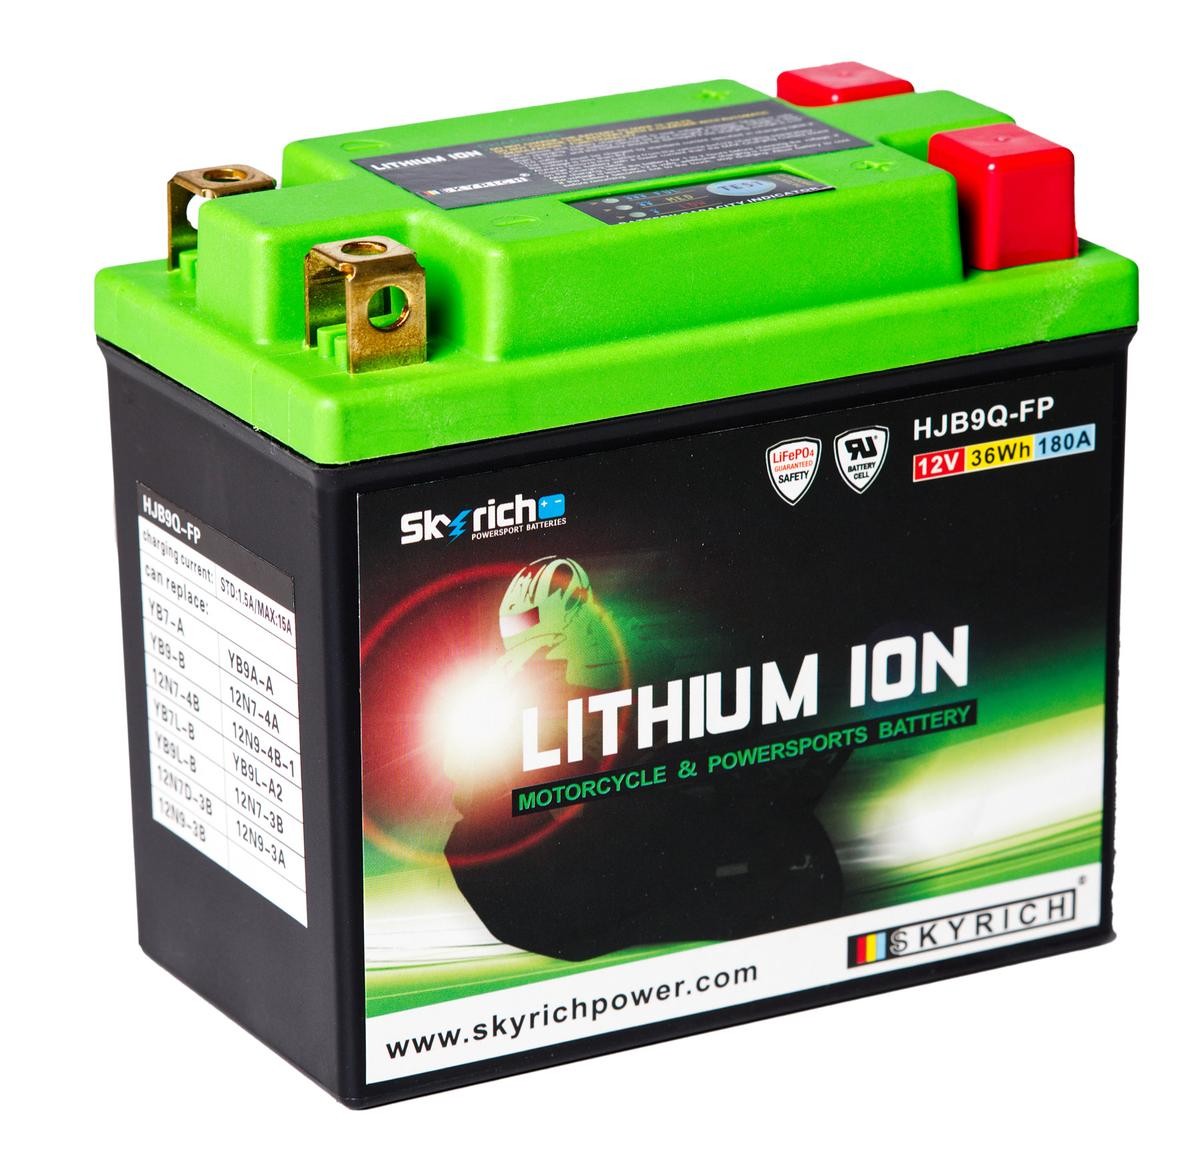 VESPA S Batterie 12V 3Ah 180A N Li-Ionen-Batterie SKYRICH LITHIUM ION HJB9Q-FP